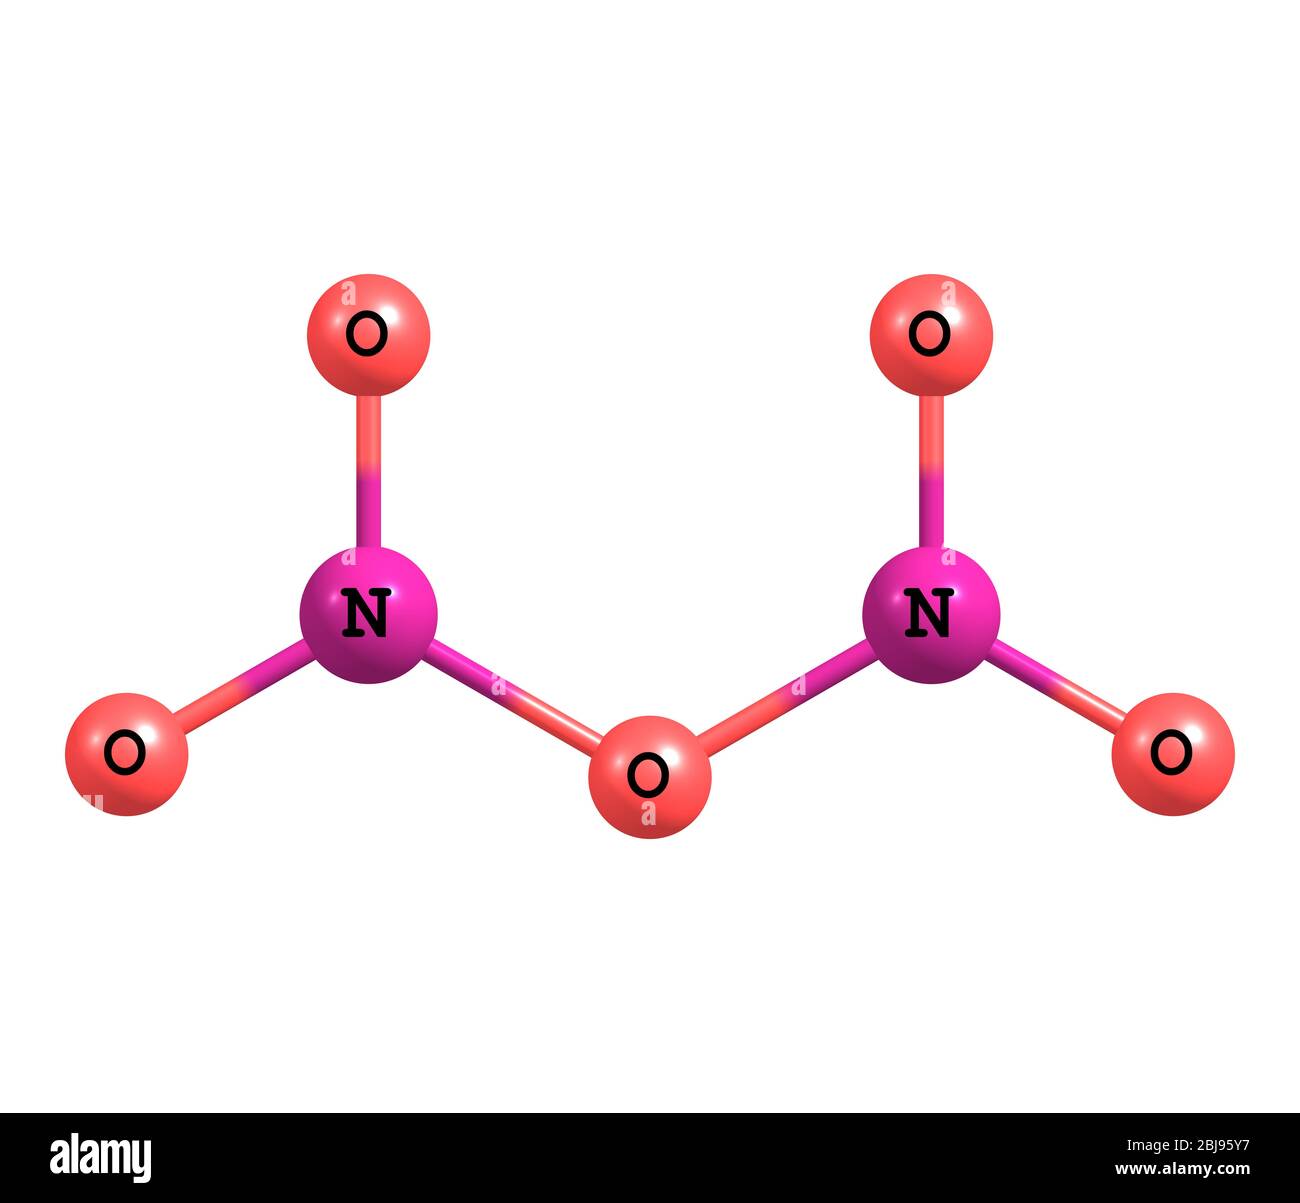 Химическое соединение n2o5. N2o5 структура. Молекула n2o5. P4o10 строение молекулы. N2o5 графическая формула.